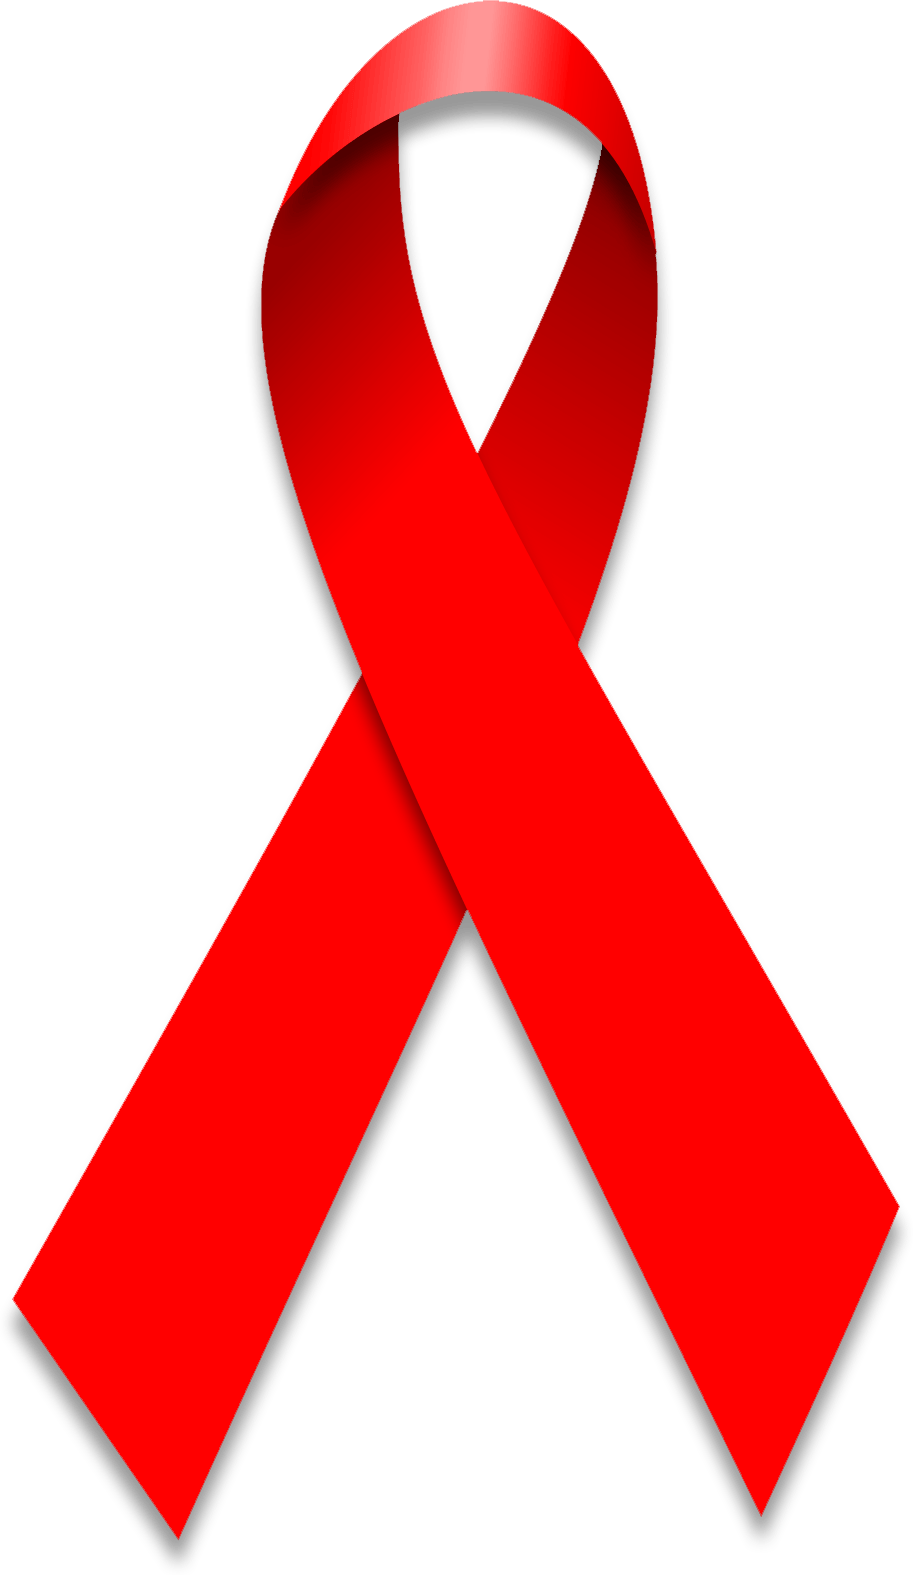 Aids Ribbon Logo - World Aids Day Ribbon.png